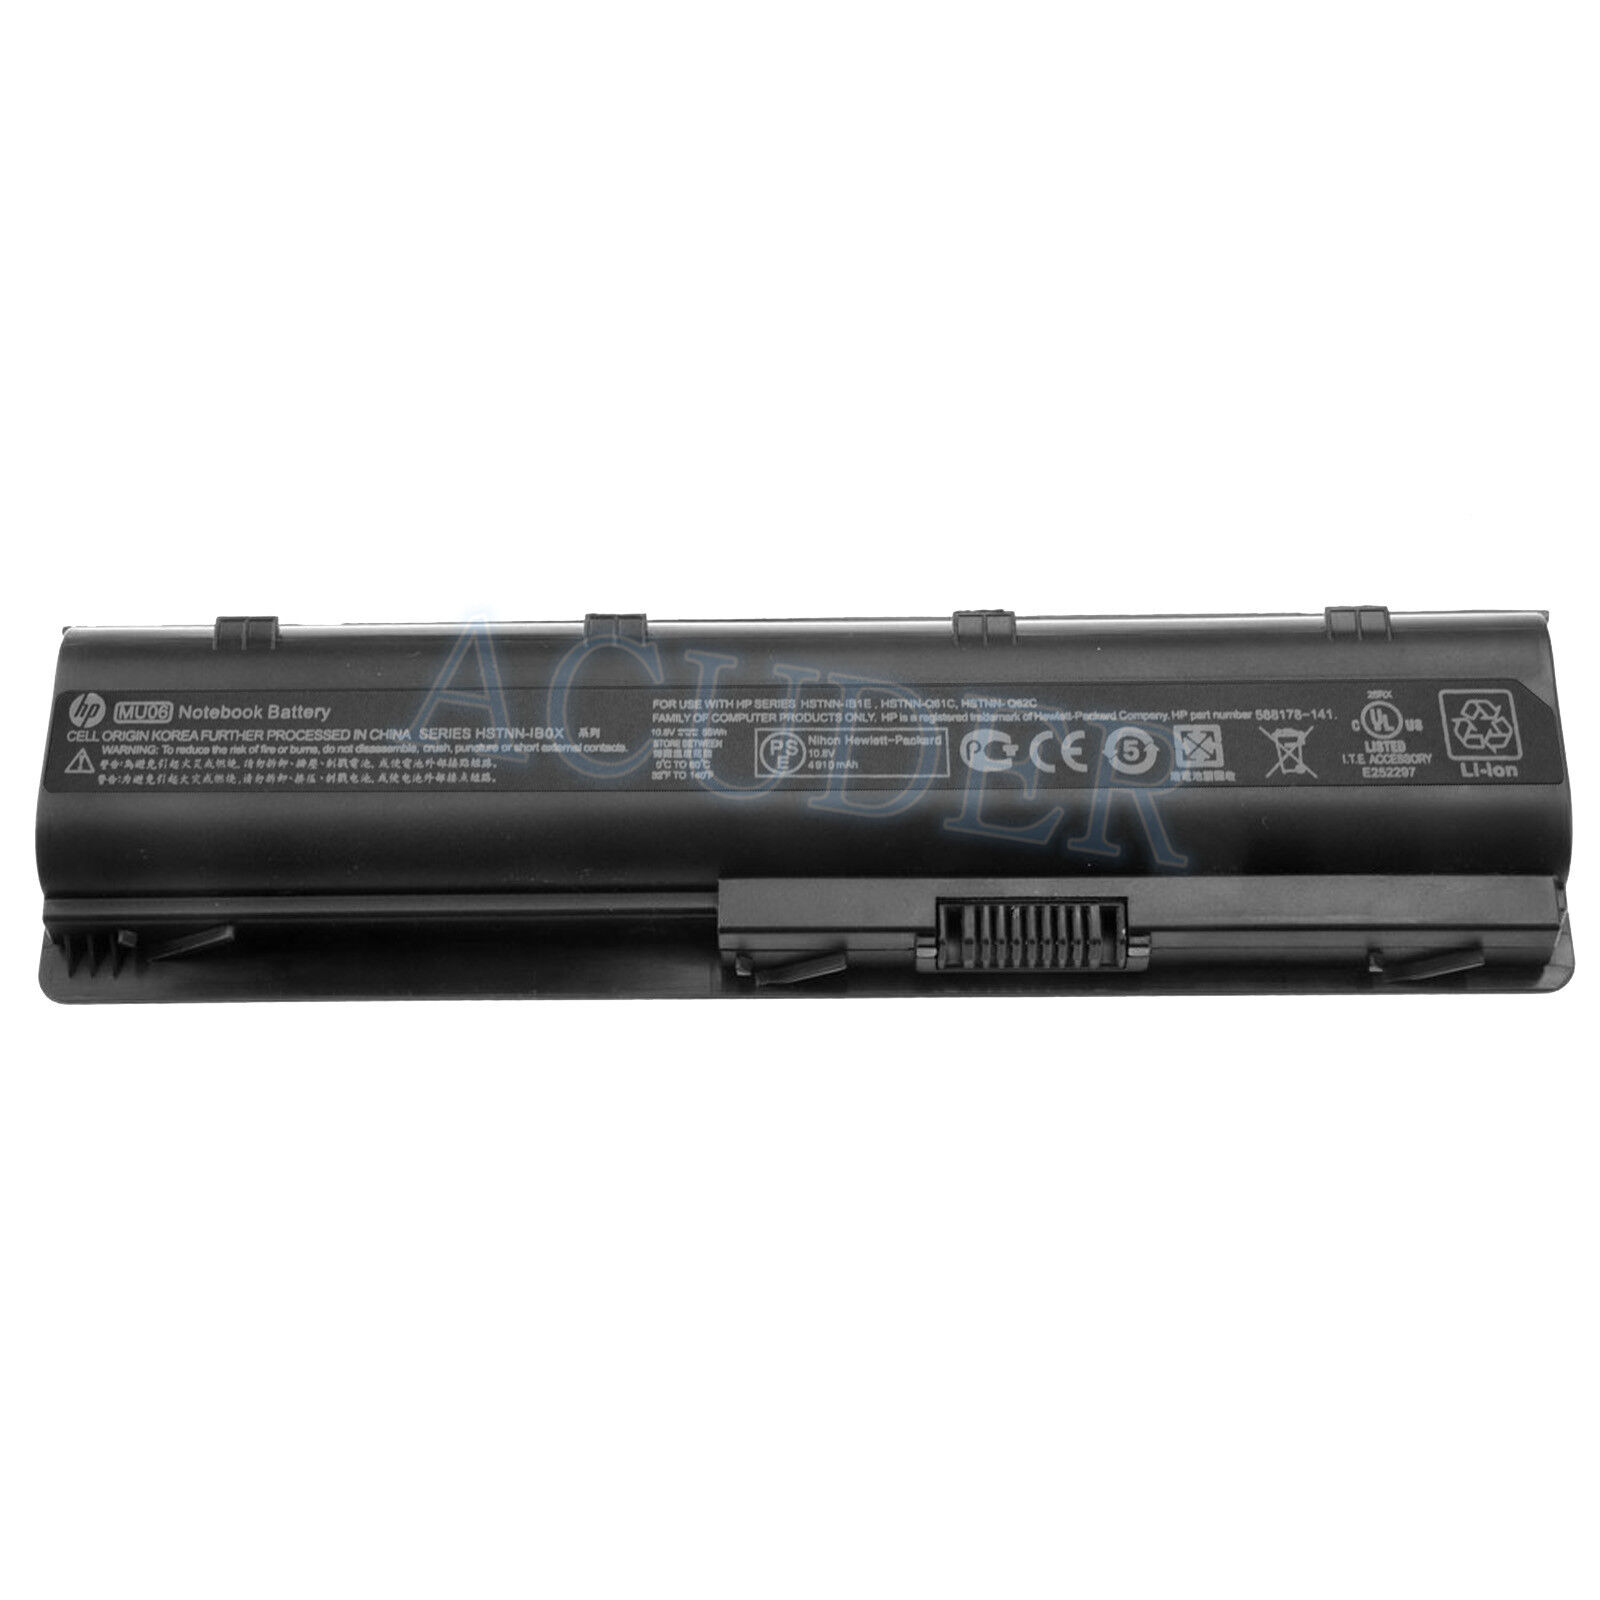 Genuine MU06 CQ42 Laptop Battery 2000-425NR Notebook 593553-001 CQ32 